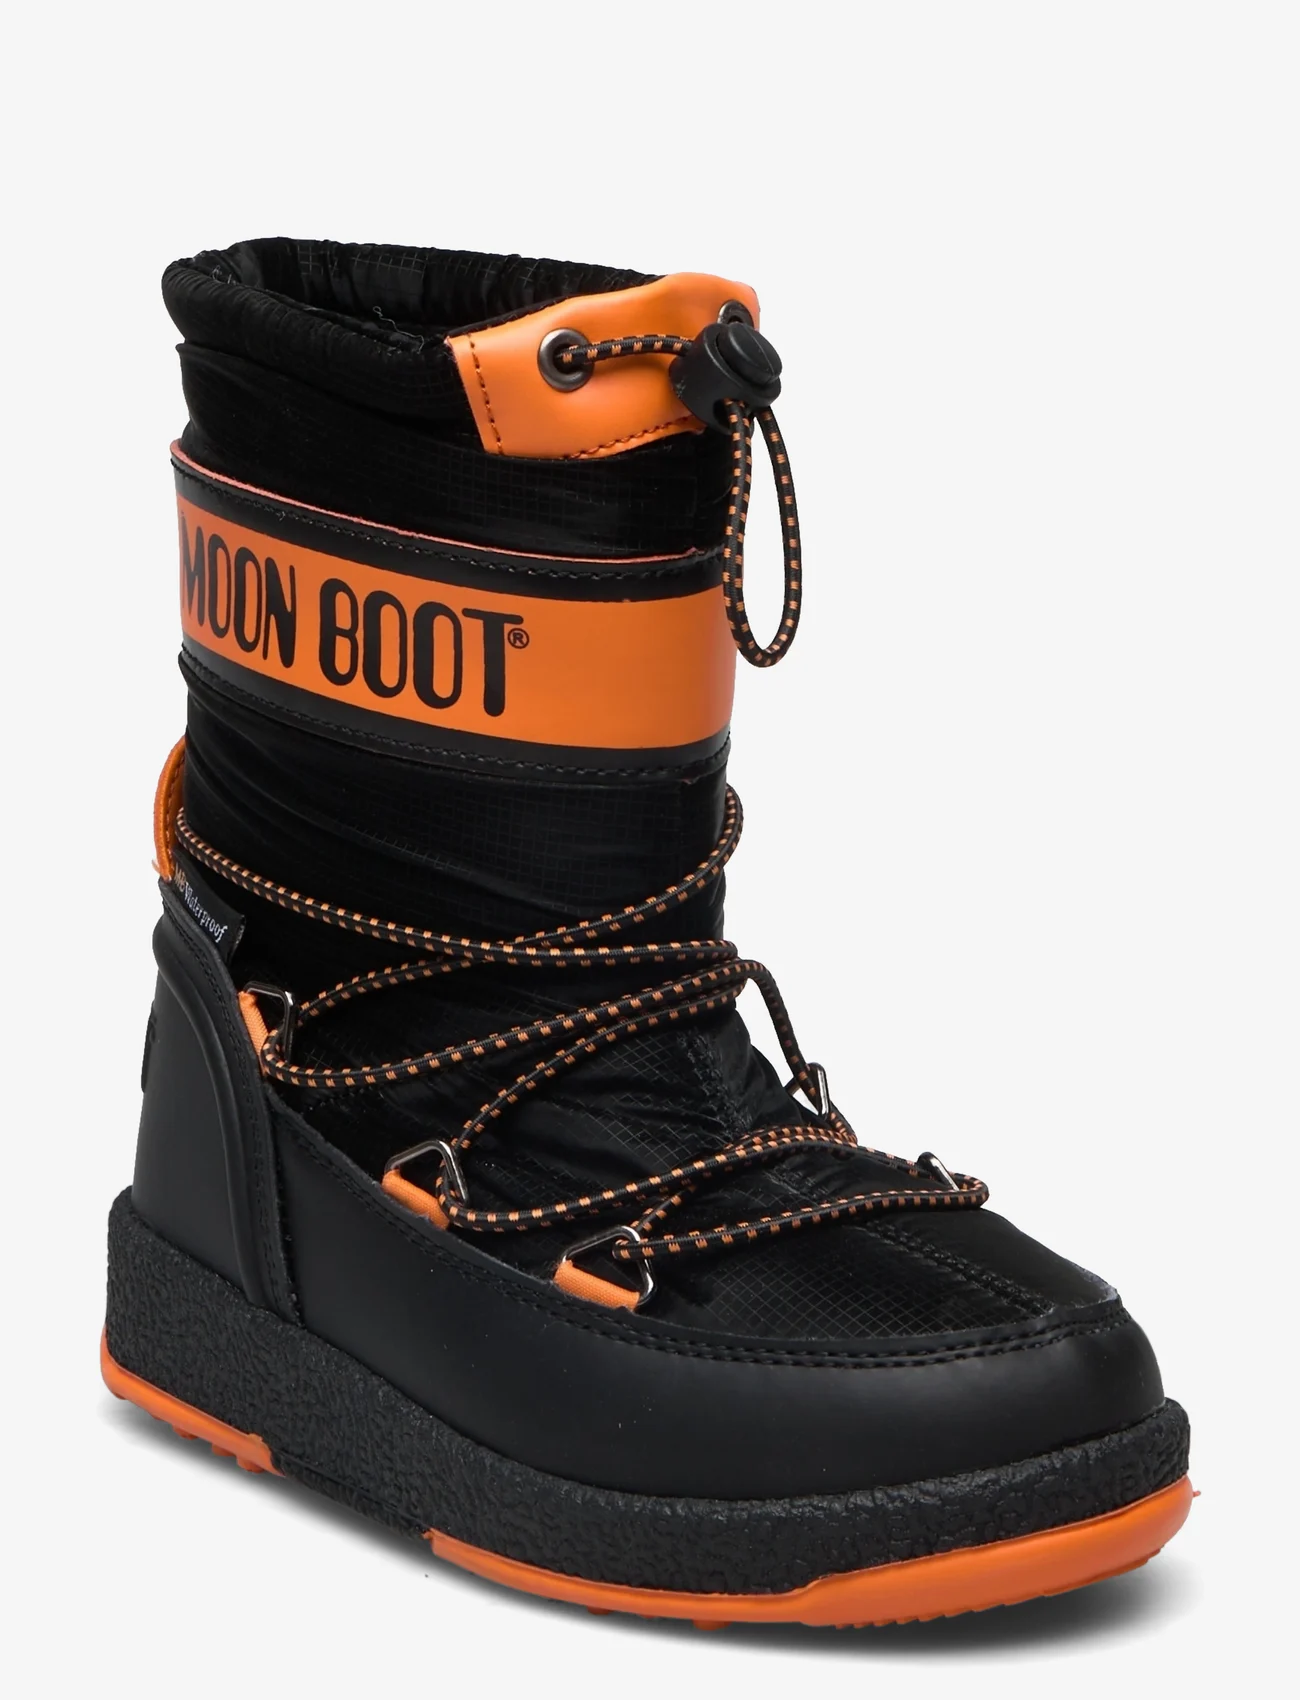 Moon Boot - MB MOON BOOT JR BOY SPORT - kinder - black-orange - 0